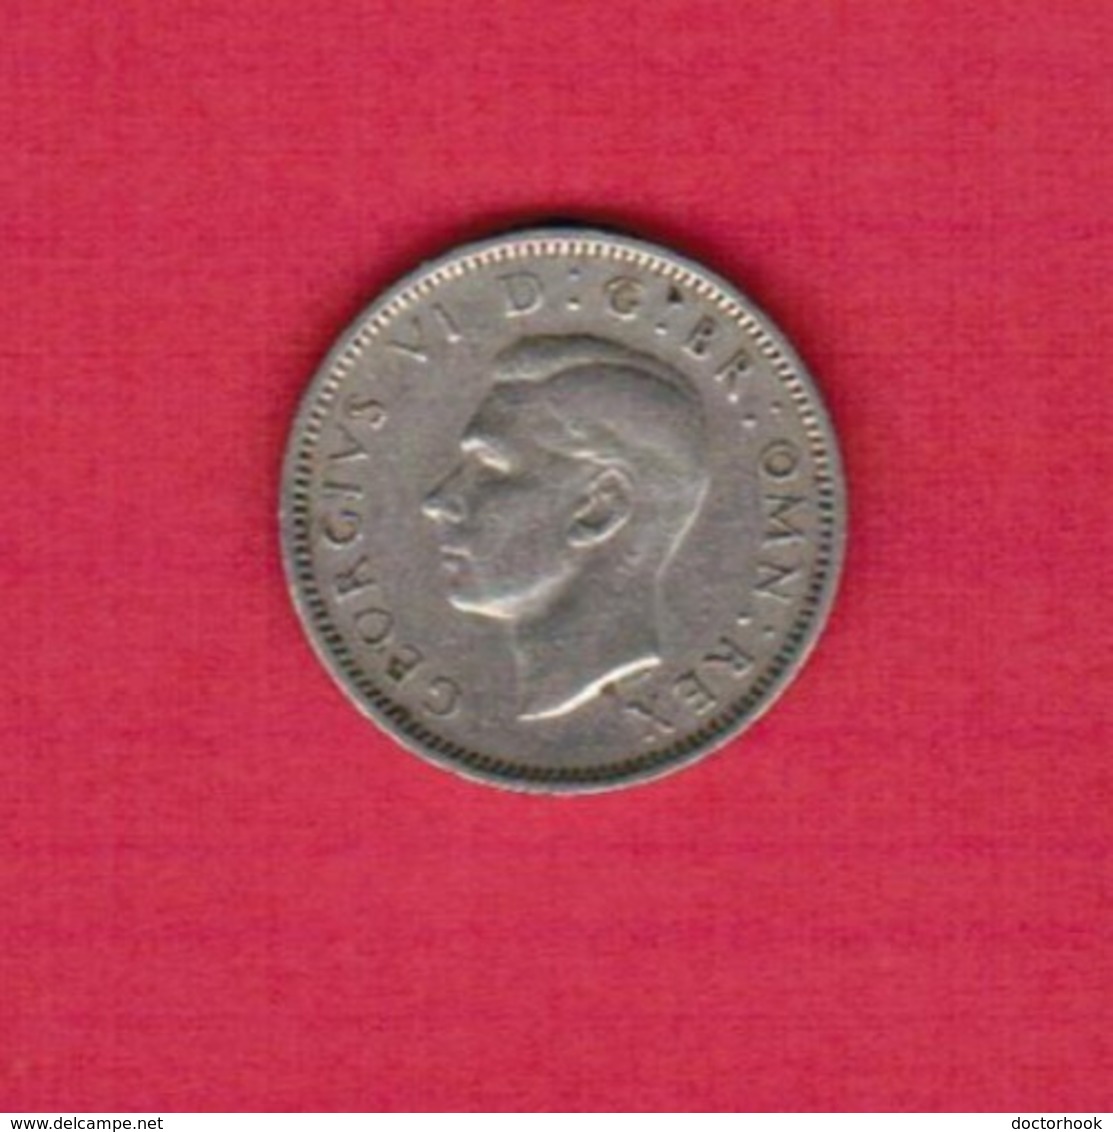 GREAT BRITAIN   6 PENCE 1948  (KM # 862) #5180 - H. 6 Pence